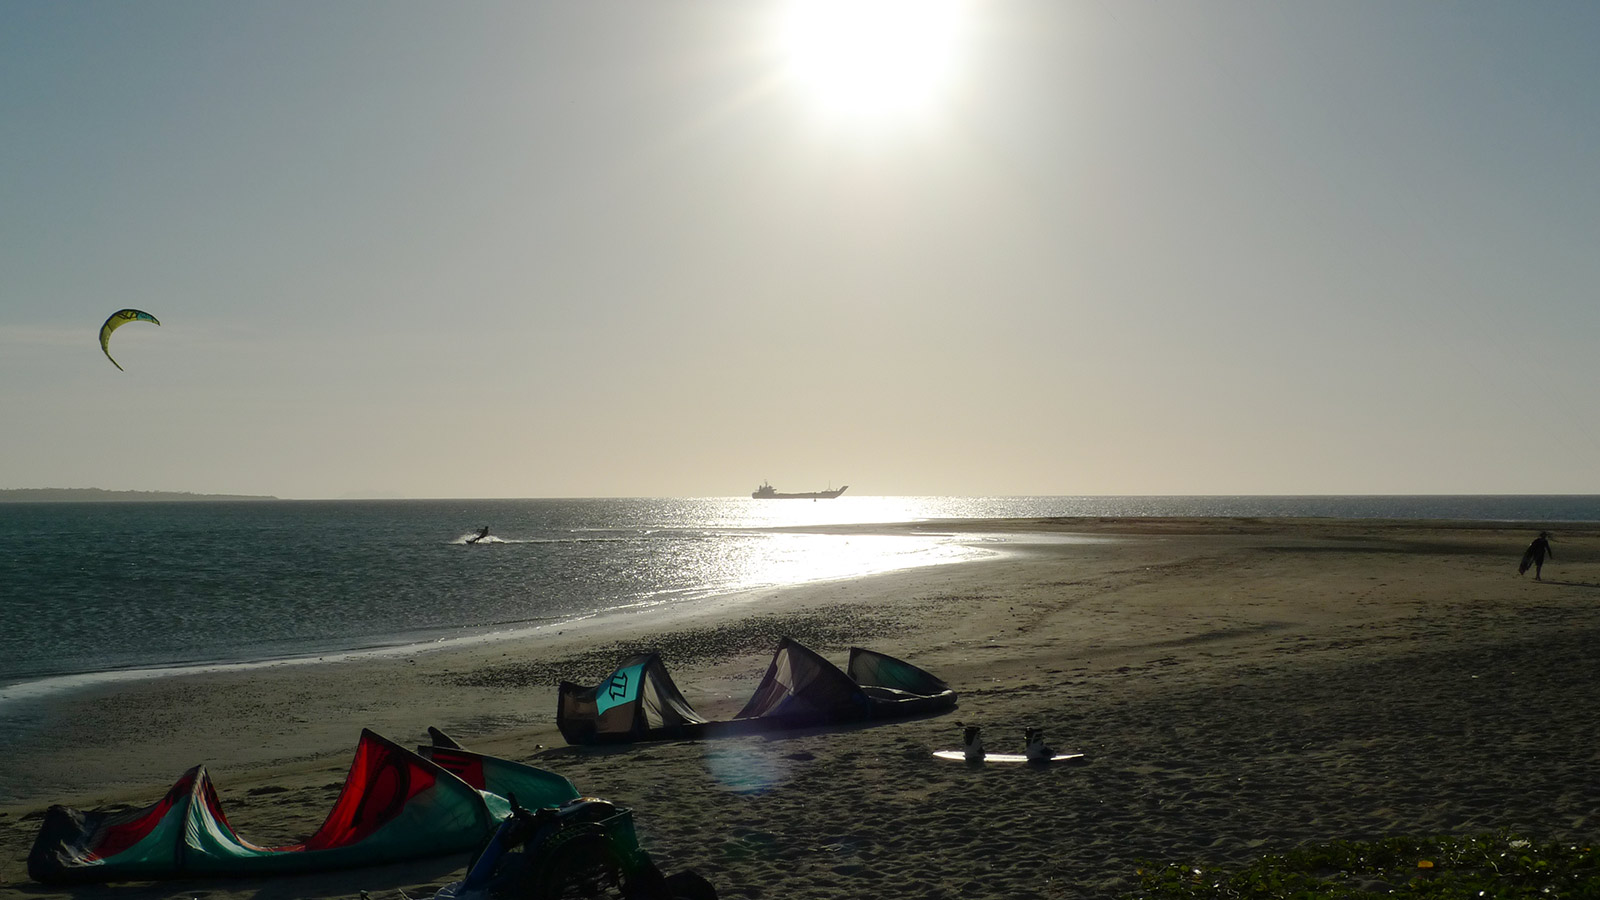 Sunset session at Capusan kitesurfing beach, Cuyo.